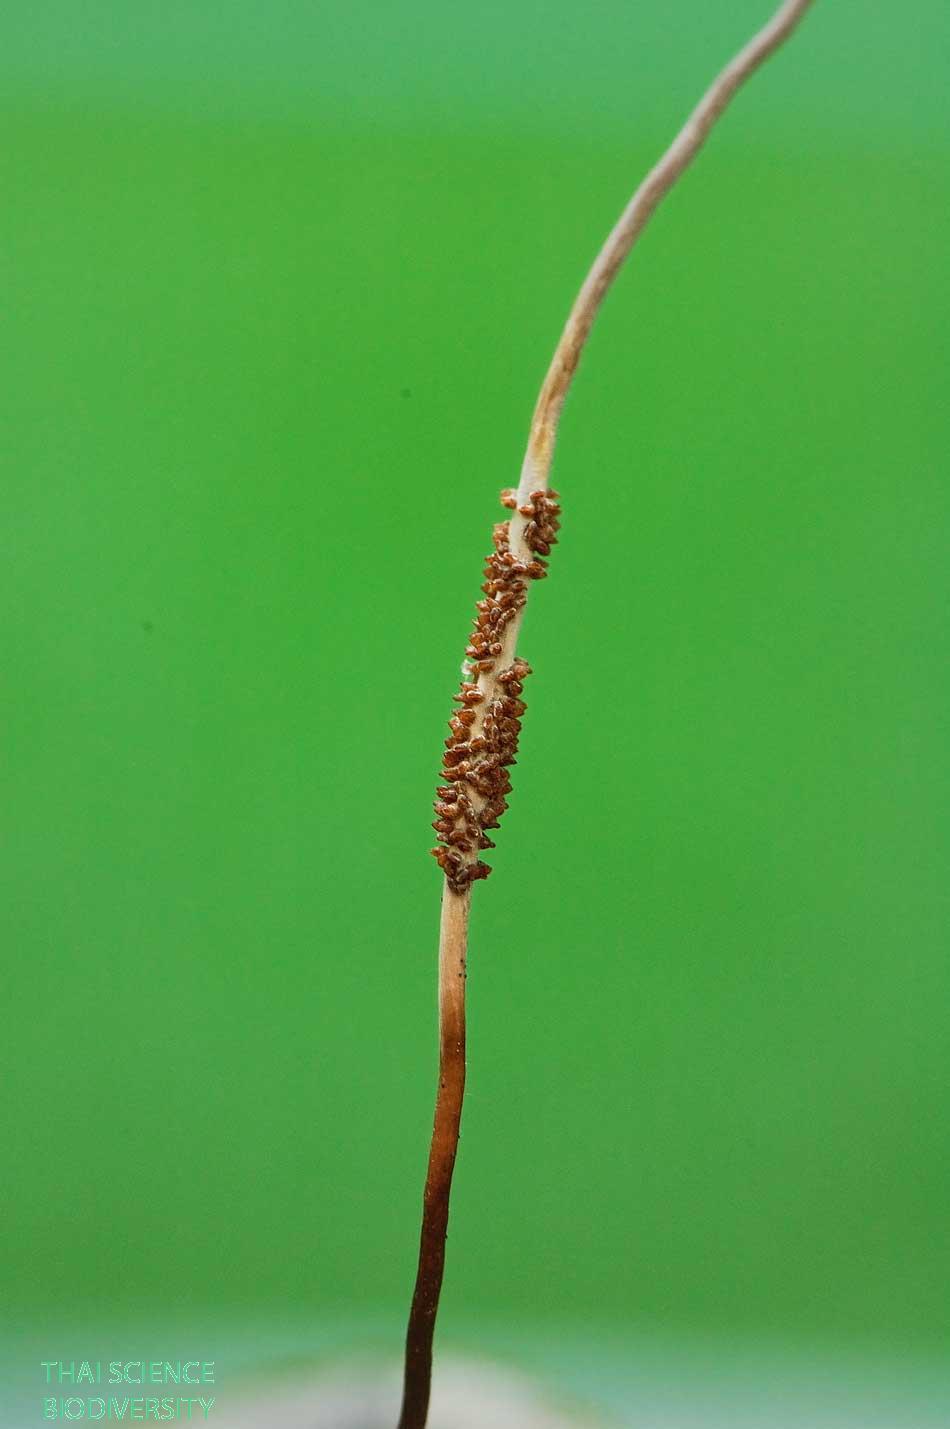 Ophiocordyceps communis